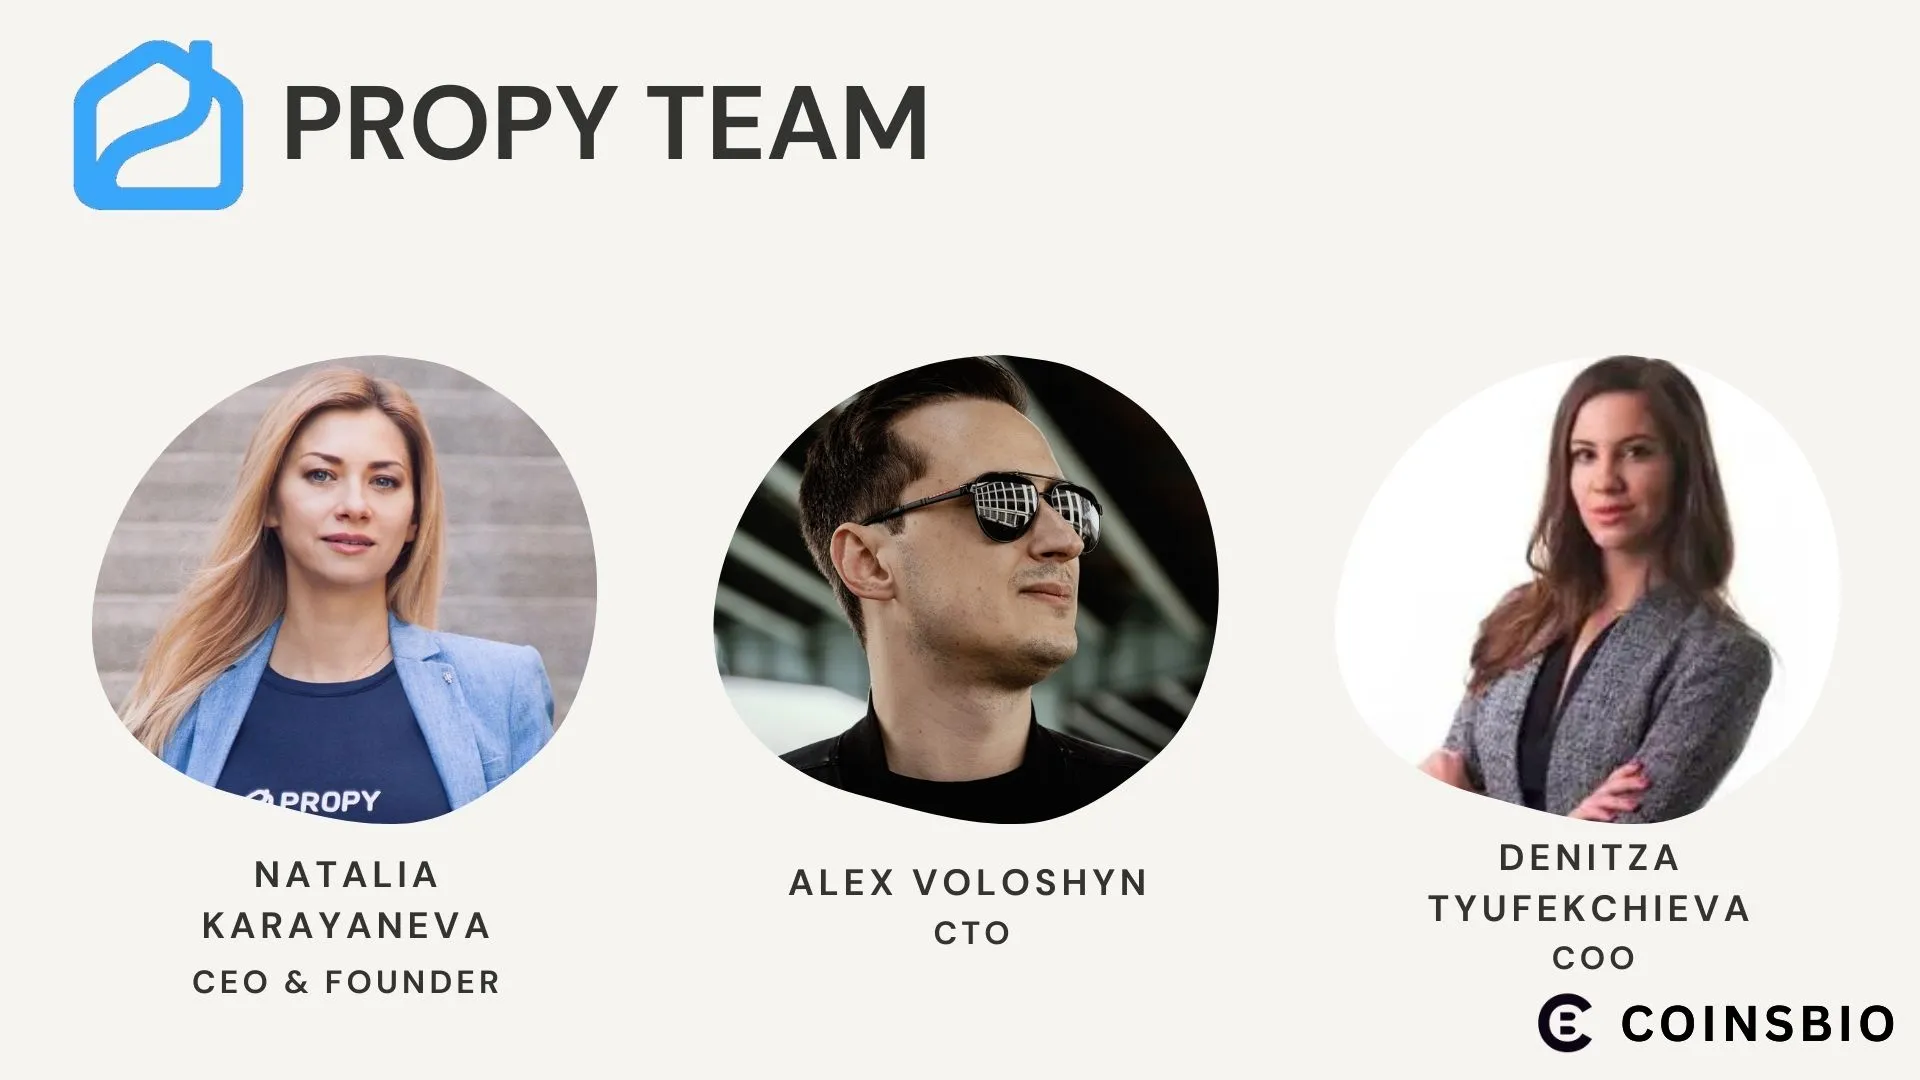 propy-Team-Natalia-Karayaneva-Alex-Voloshyn-Denitza-Tyufekchieva profile images